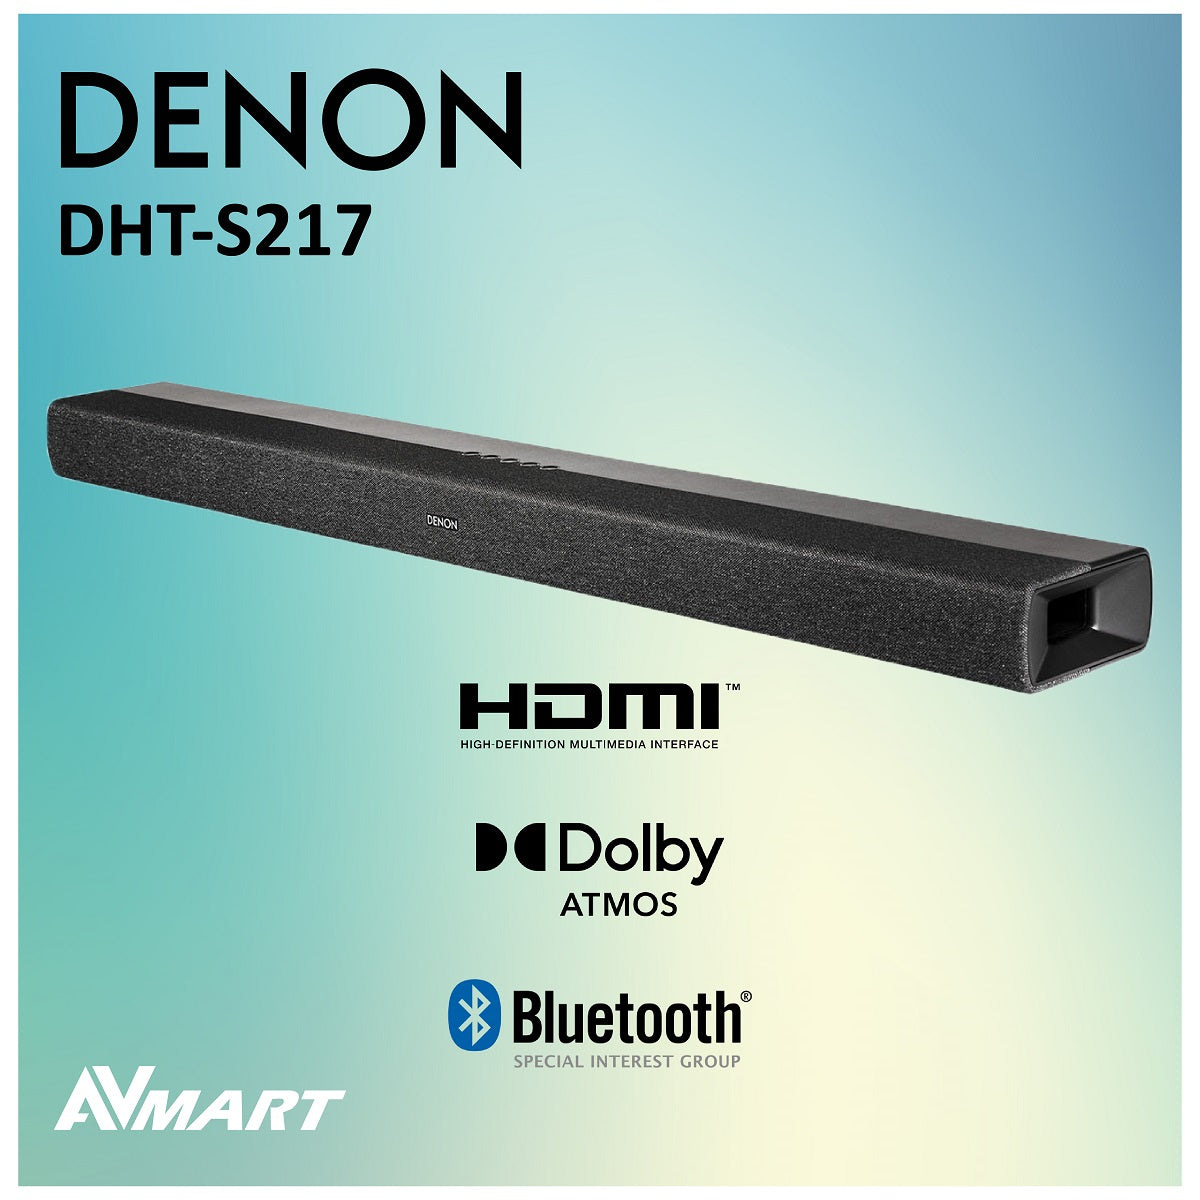 DENON 天龍DHT-S217 Dolby ATMOS MART 杜比全景聲2.1 Soundbar 一體式家居音響DHTS217 – AV